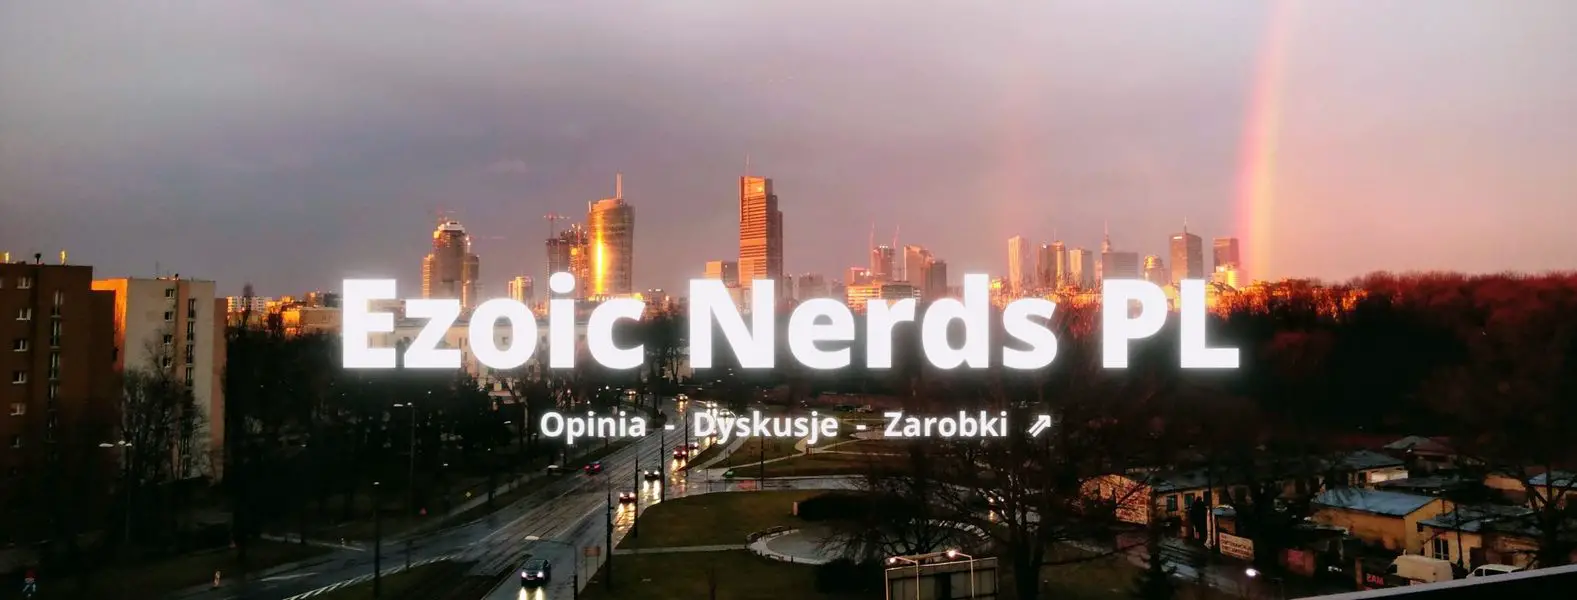 Ezoic Nerds - Facebook Group Dyskusji